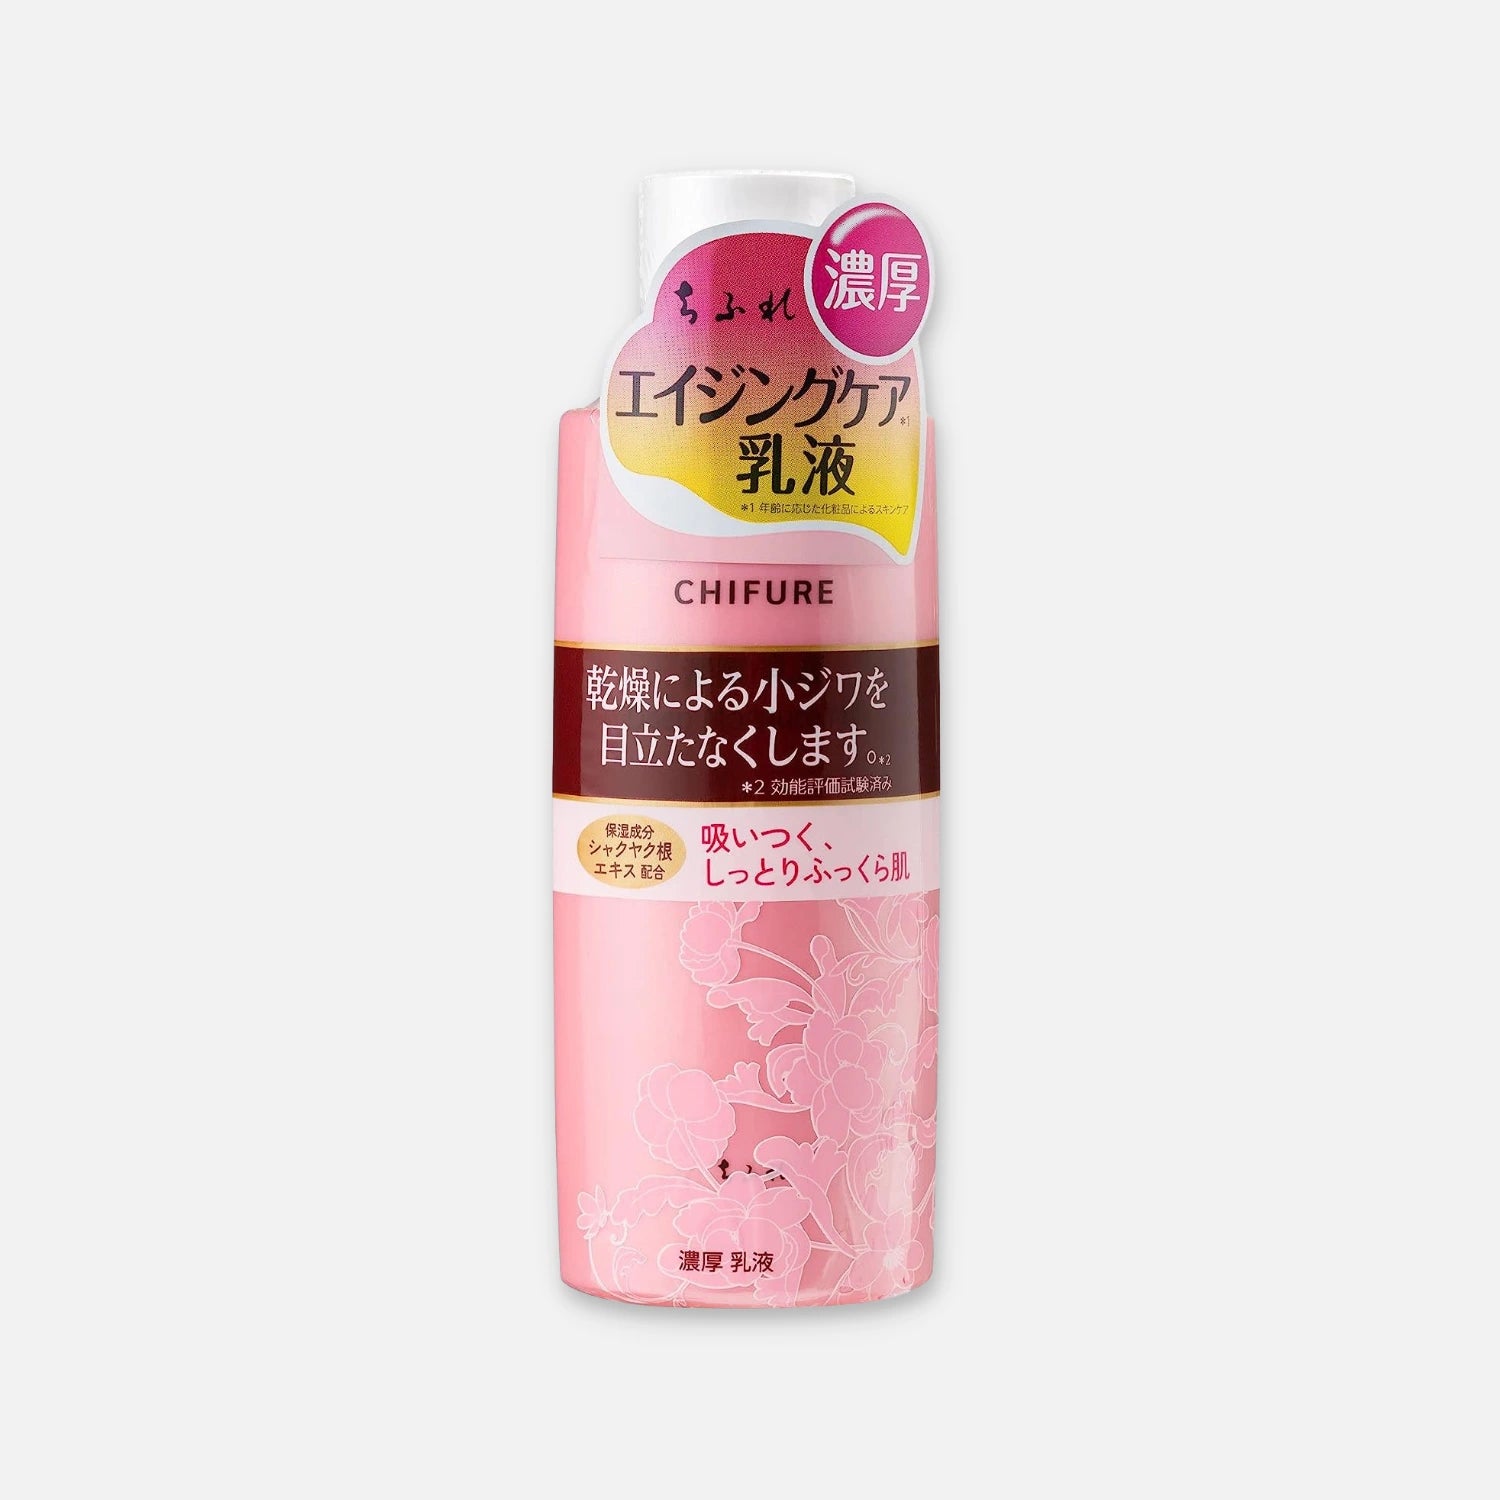 Chifure Deep Moisture Milky Lotion Aging Care 150ml - Buy Me Japan